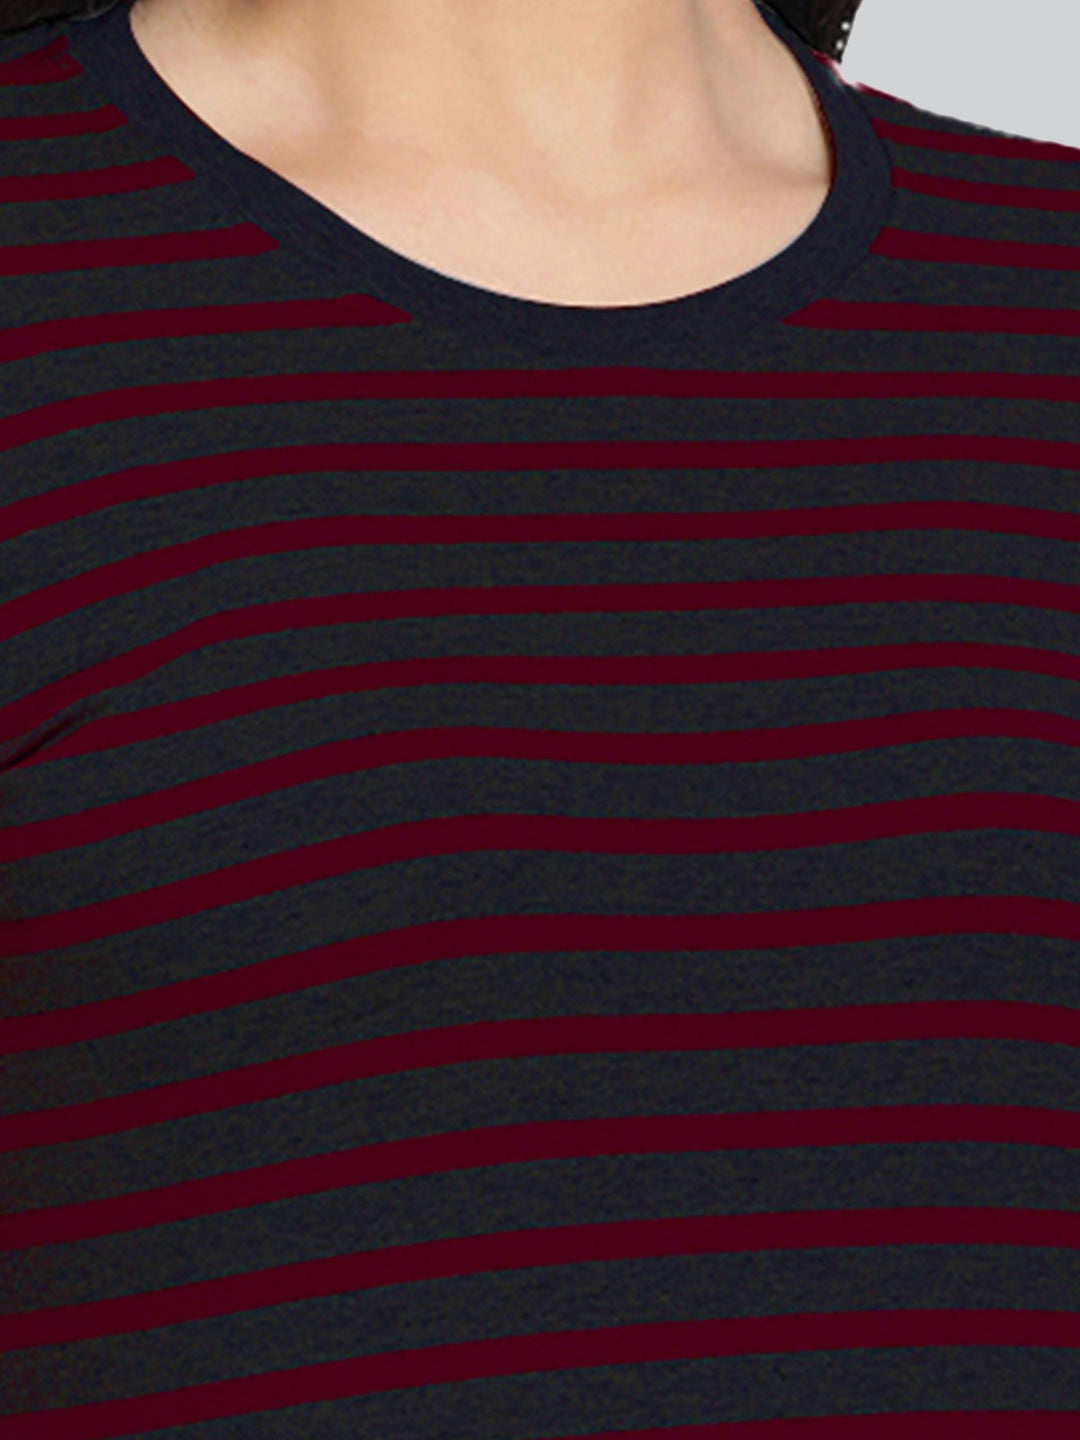 Black Base with Maroon Stripes Round Neck 3/4 Sleeve T-Shirt #408